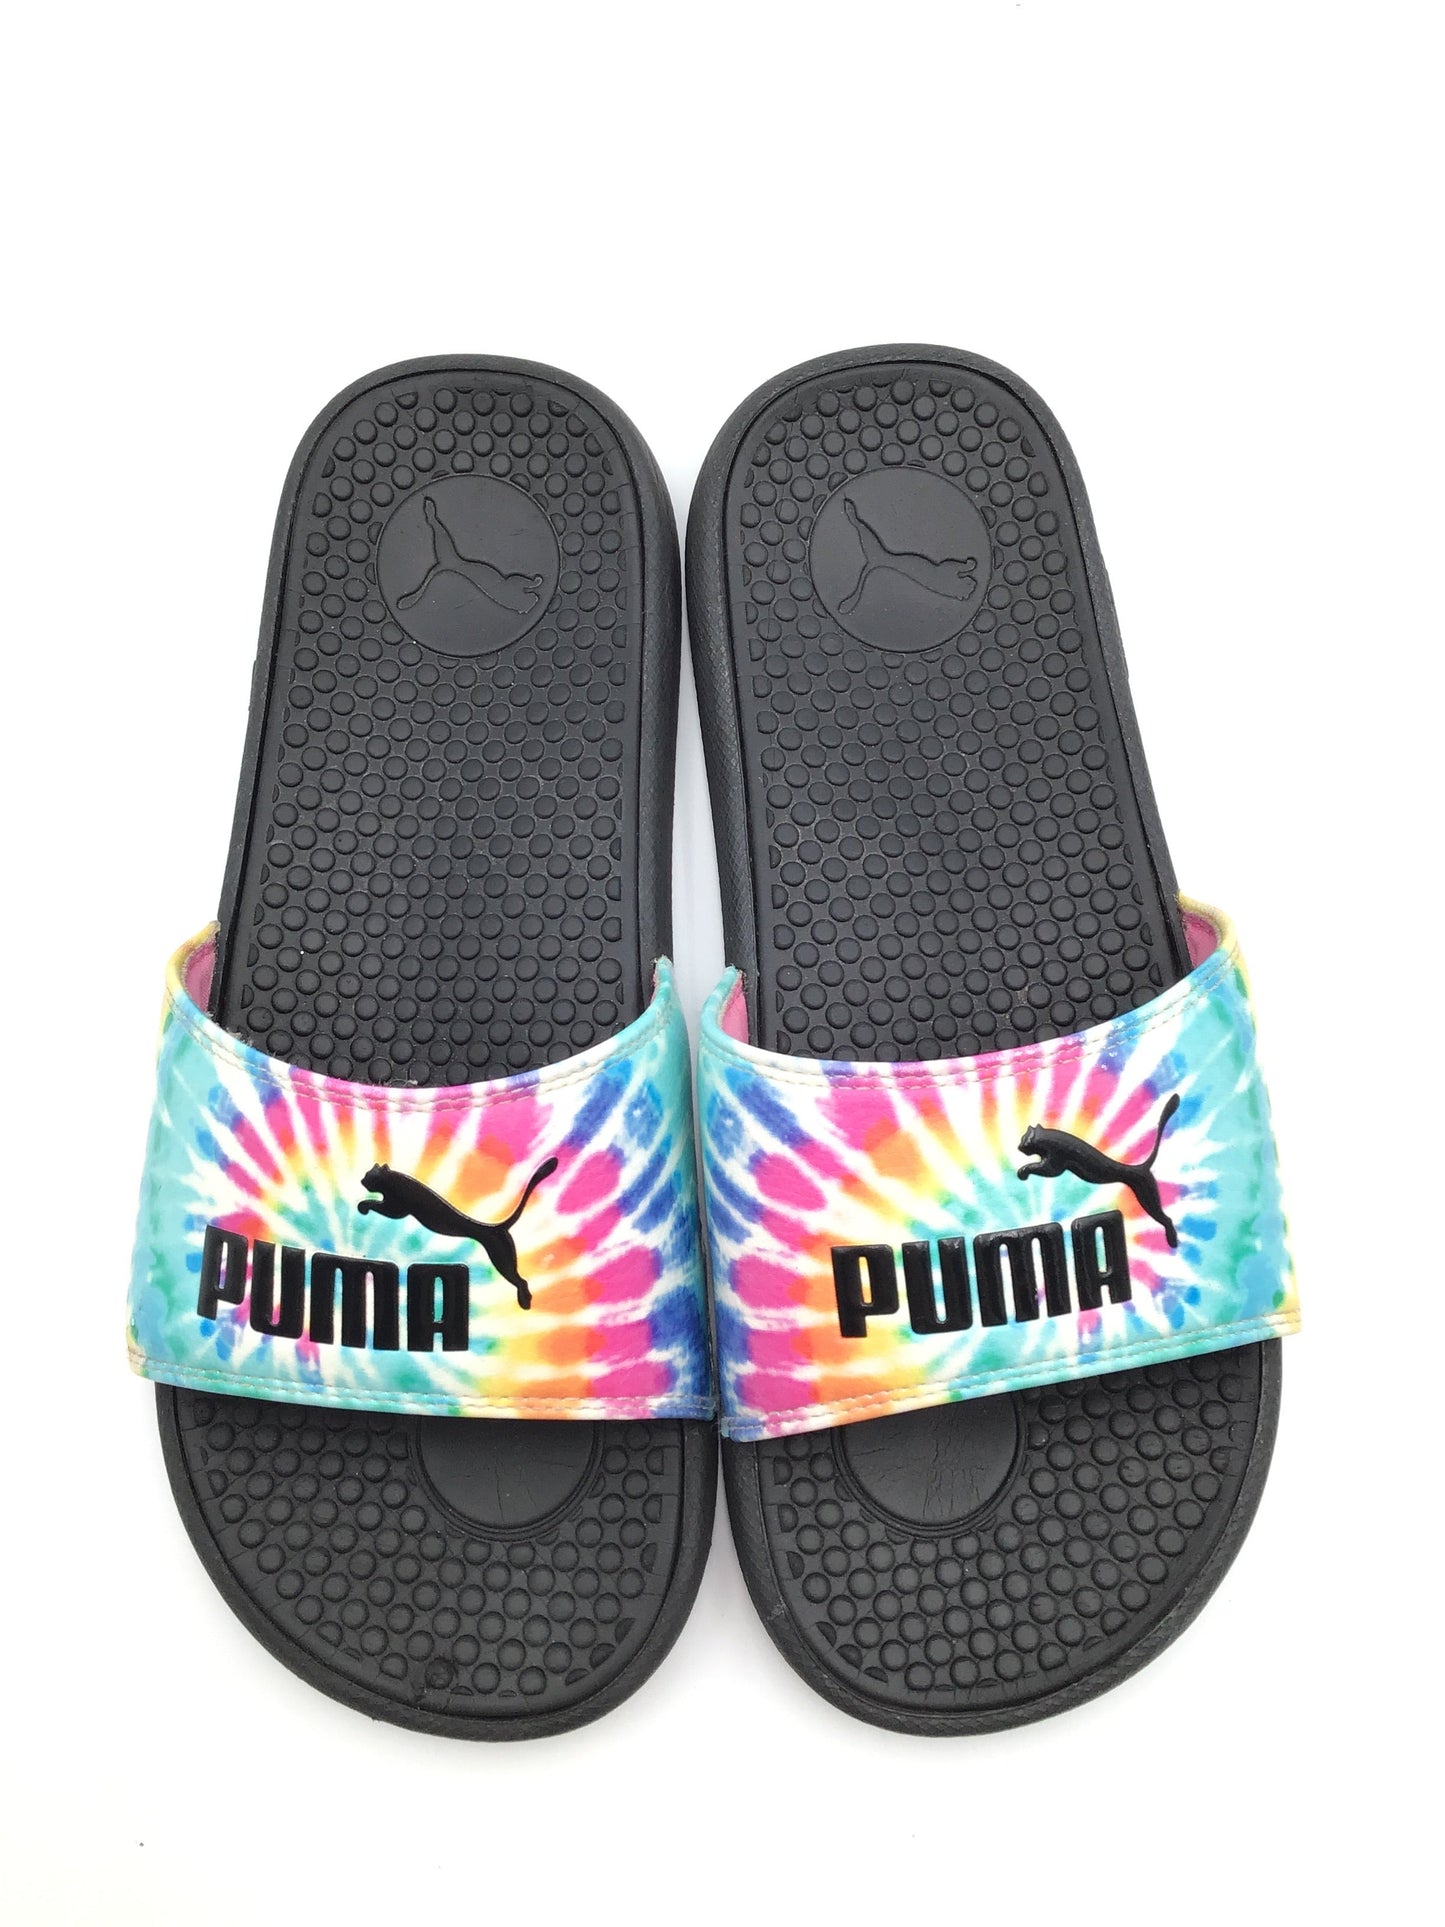 Multi-colored Shoes Athletic Puma, Size 10